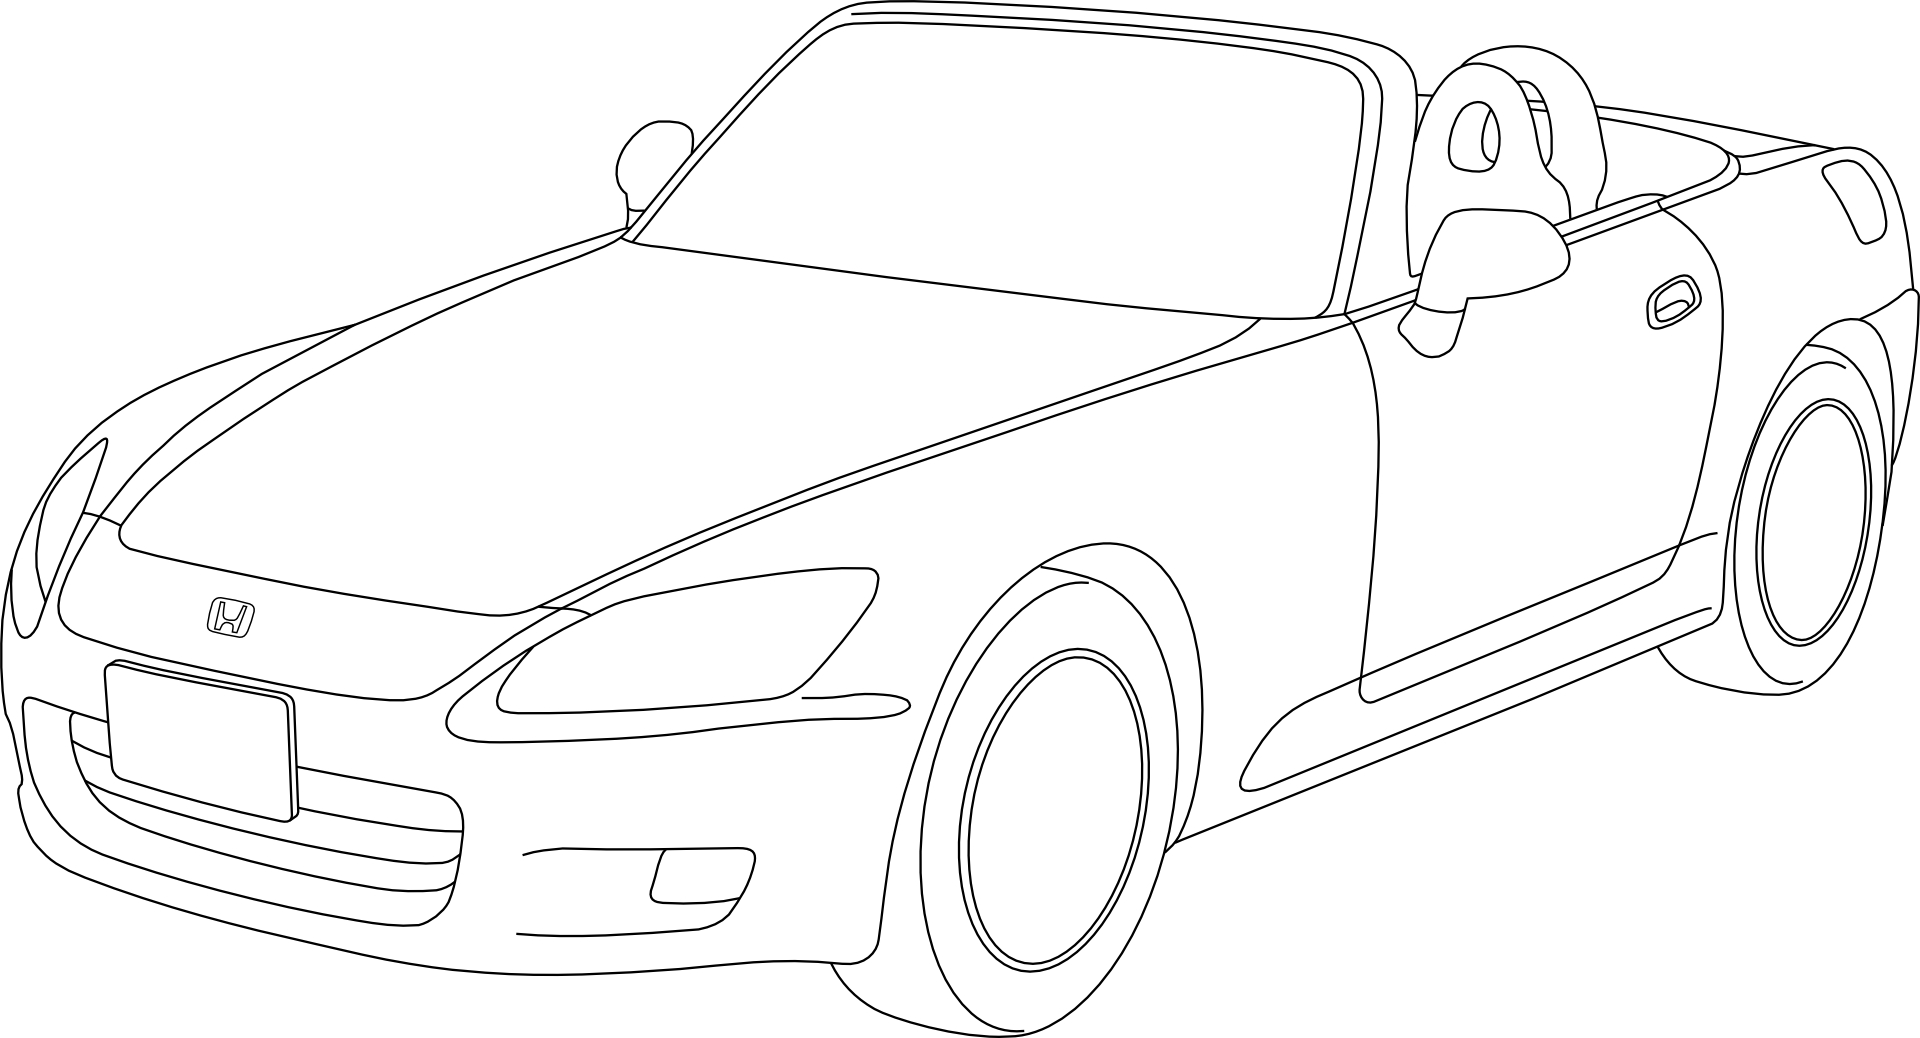 Stick drawing,car vector